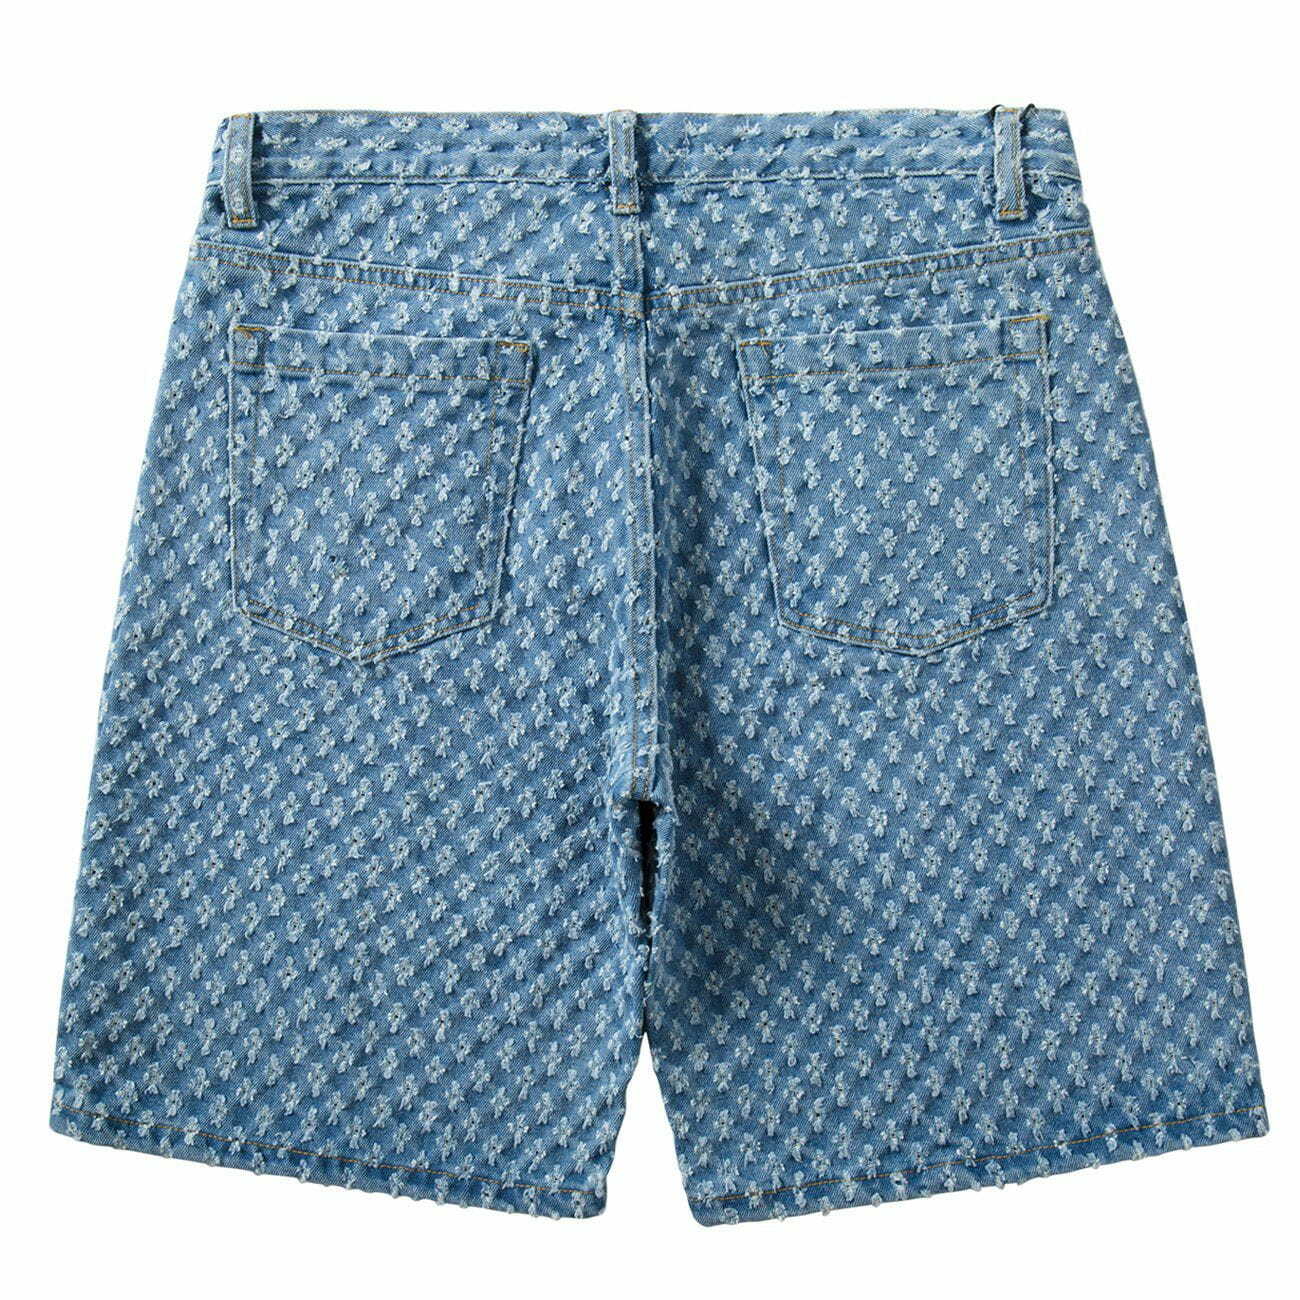 plum denim shorts with raw edge detail edgy y2k fashion 4767